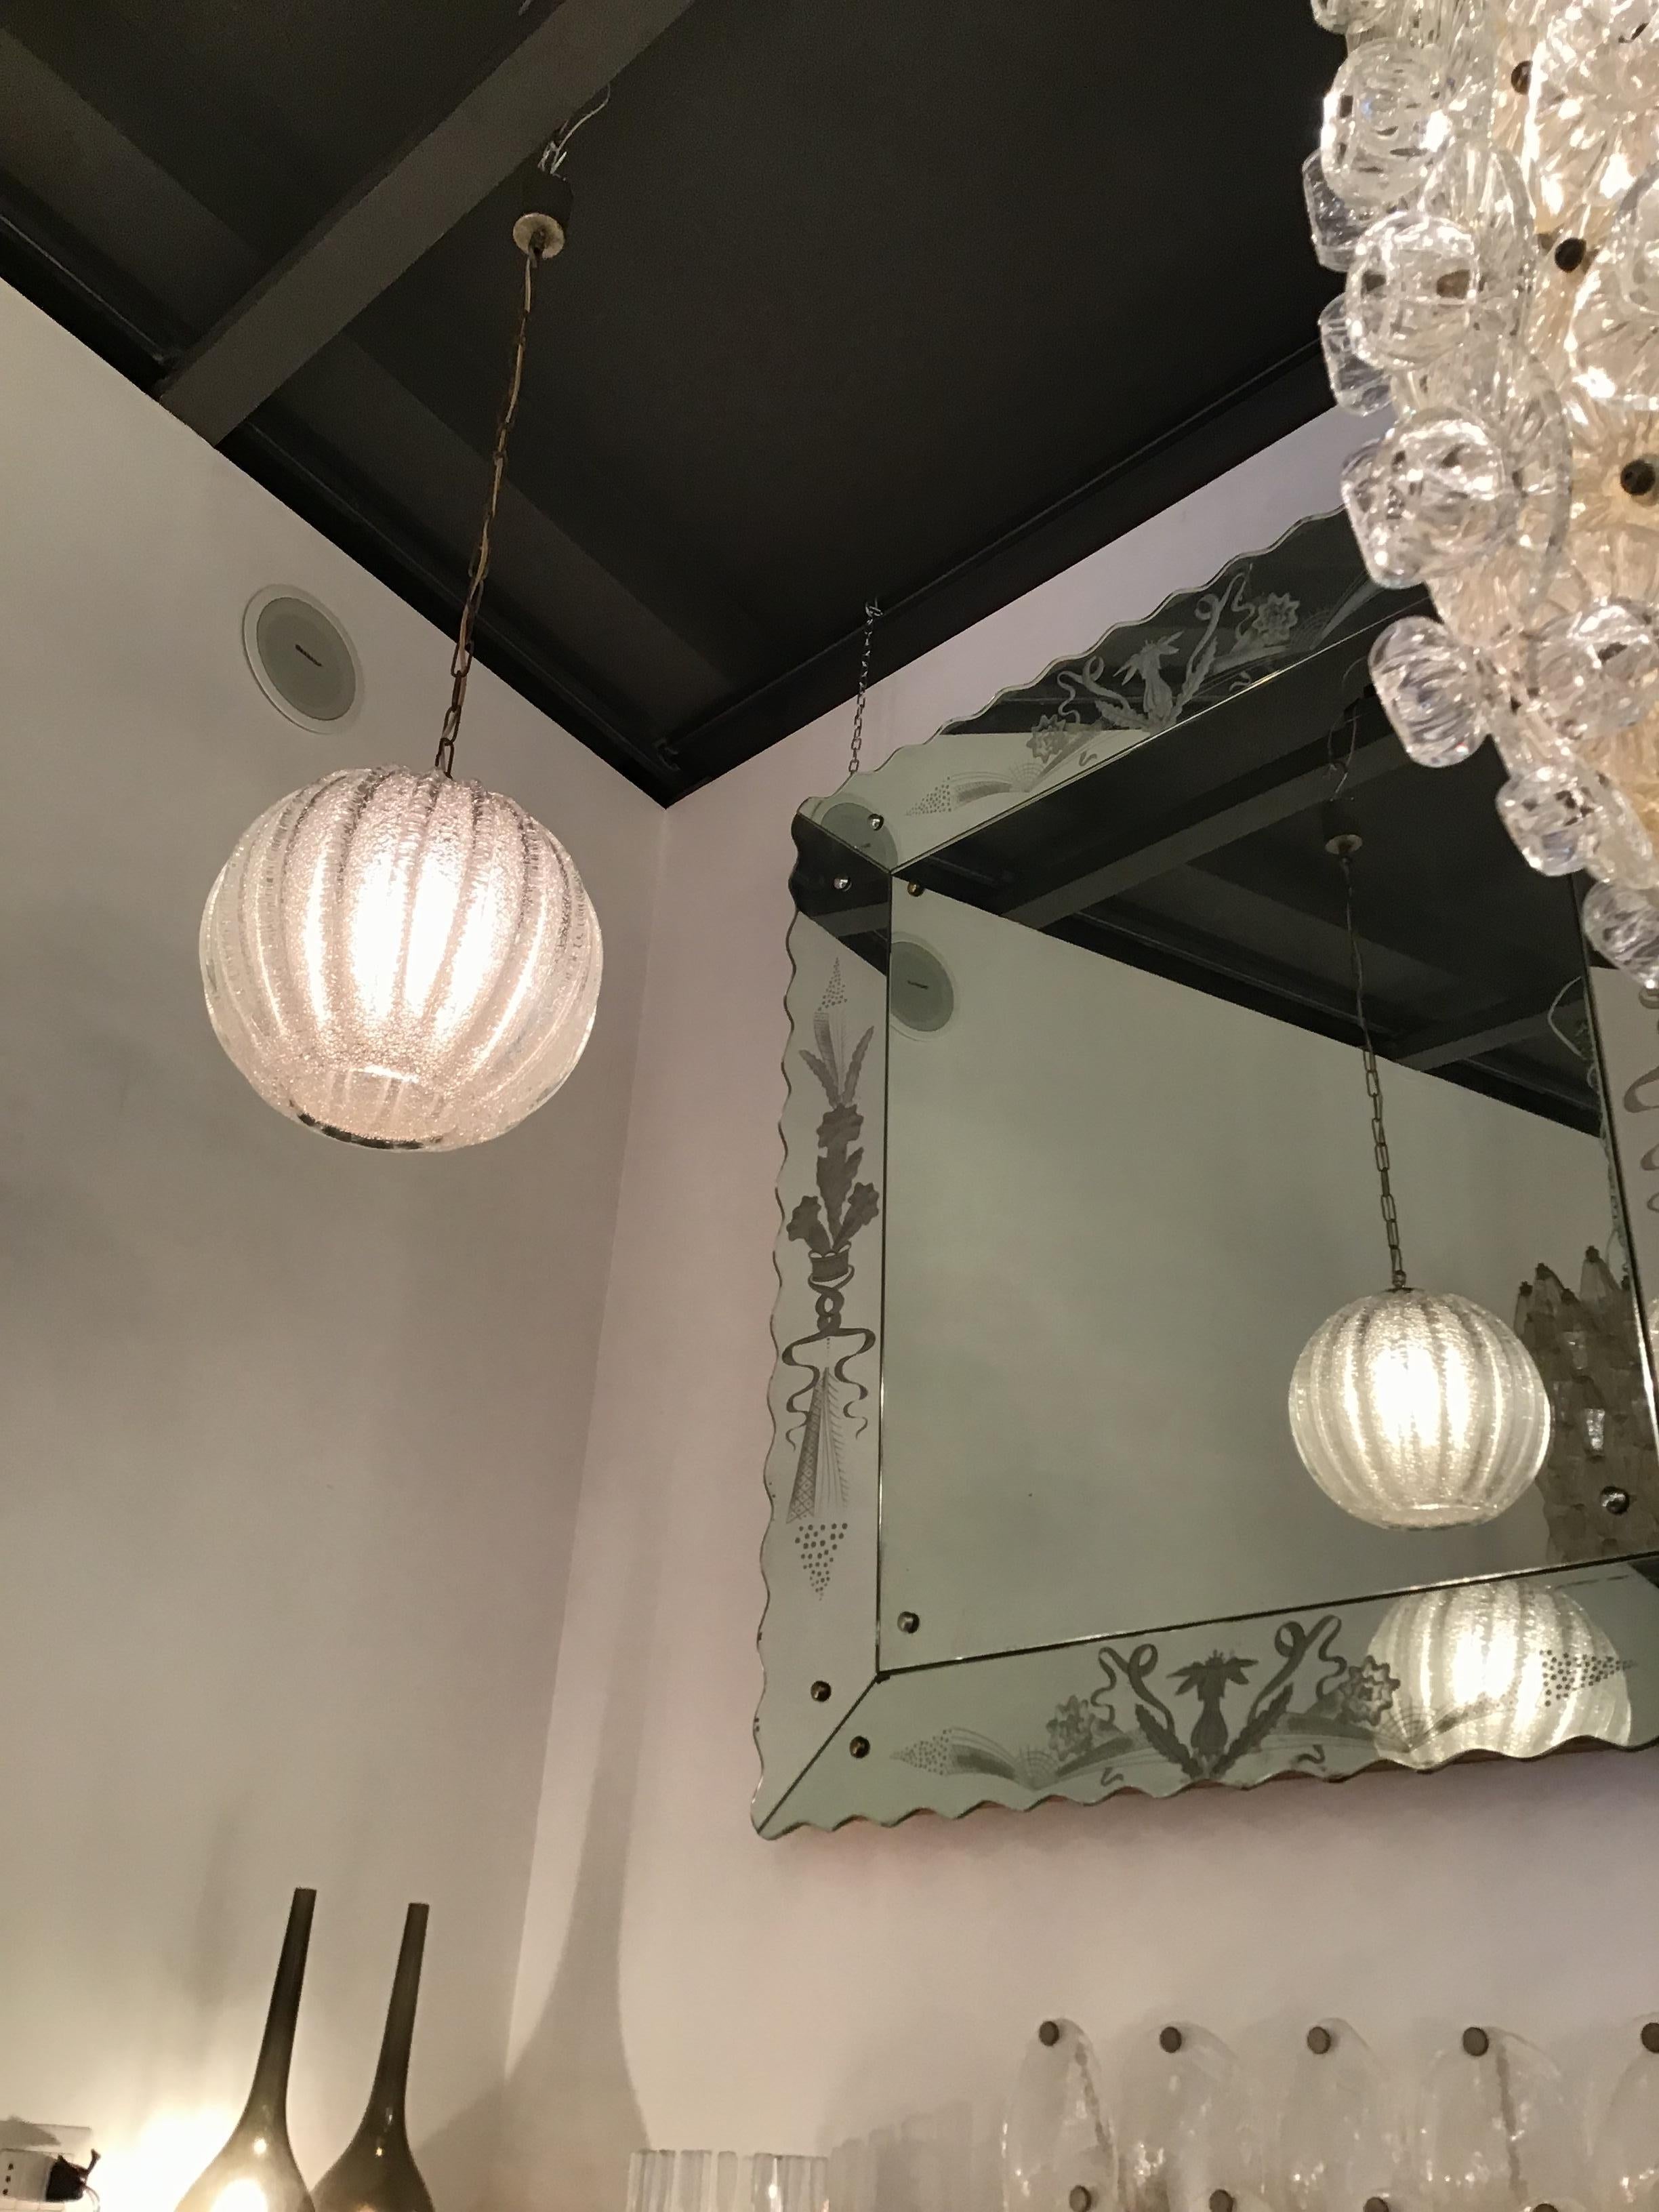 Seguso Murano glass chandeliers ”Dew“, 1940, Italy.